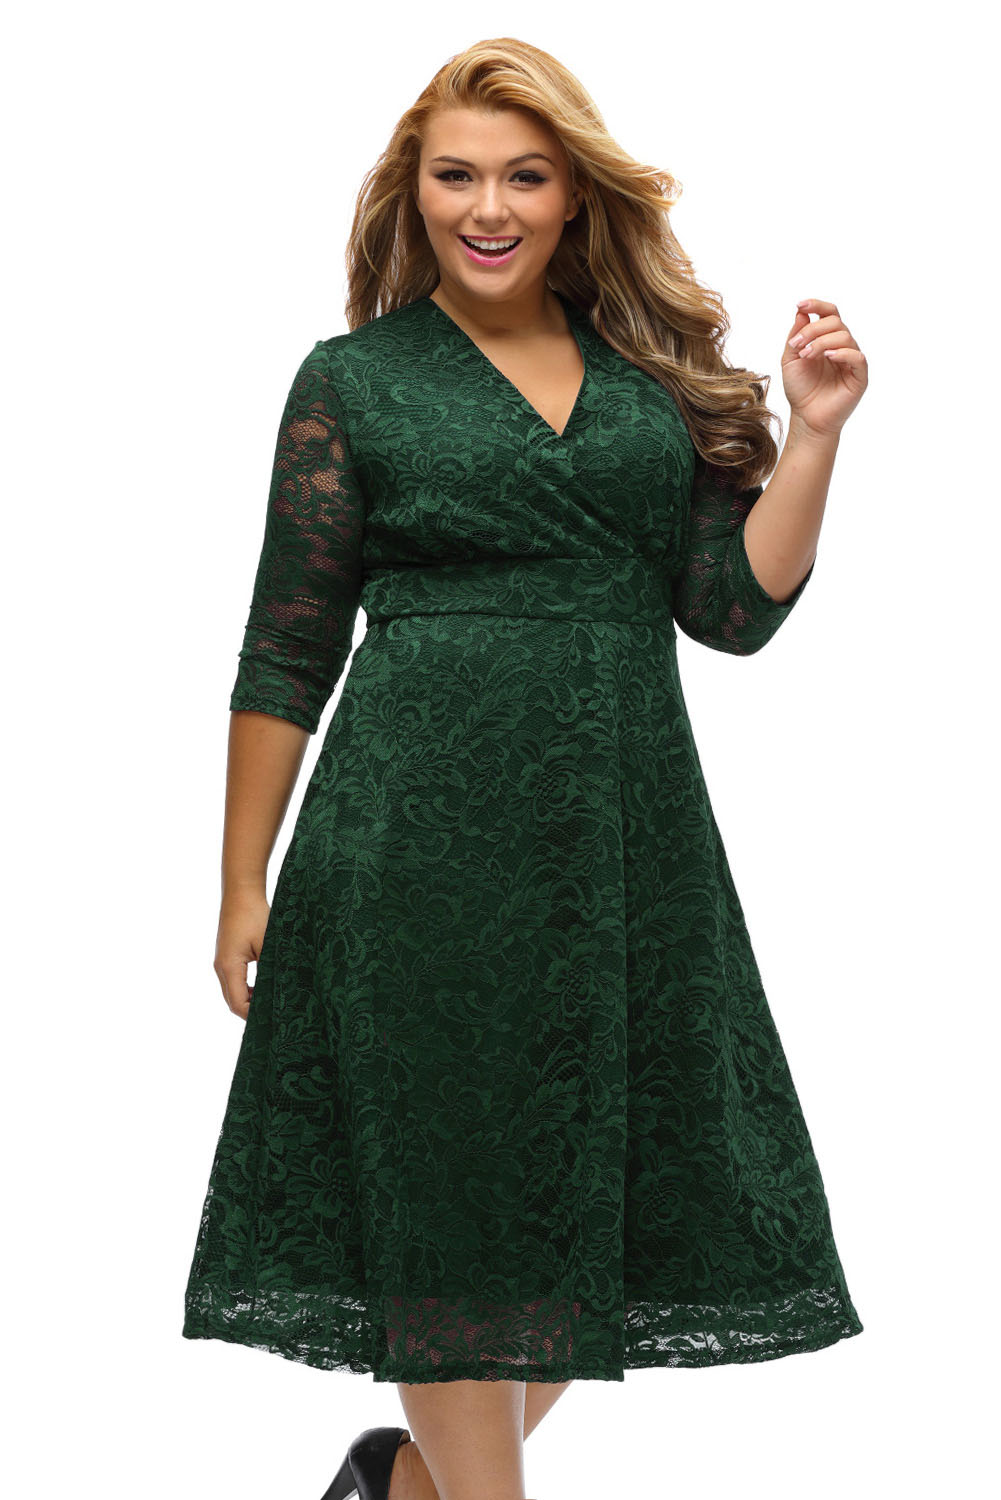 BY61442-9 Olive Plus Size Surplice Lace Formal Skater Dress